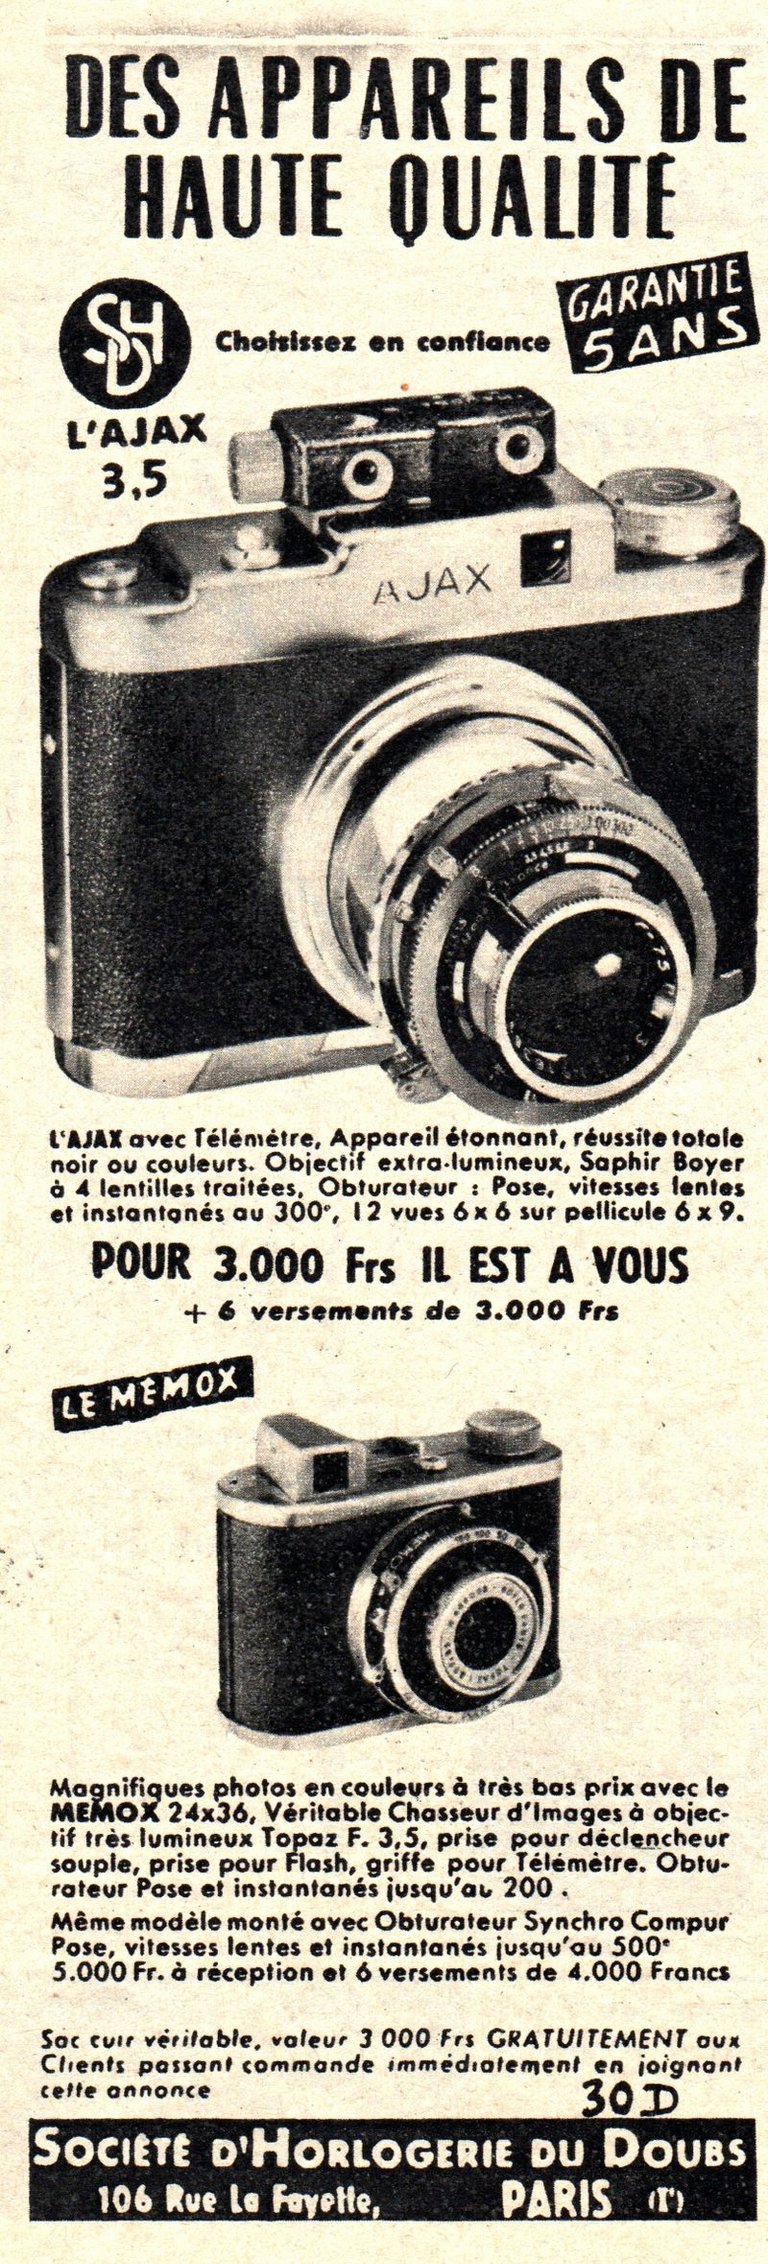 Alsaphot - L'Ajax 3,5 SHD, Le Télémètre Major, Le Memox 24 x 36 - juillet 1957 - Sciences & Vie